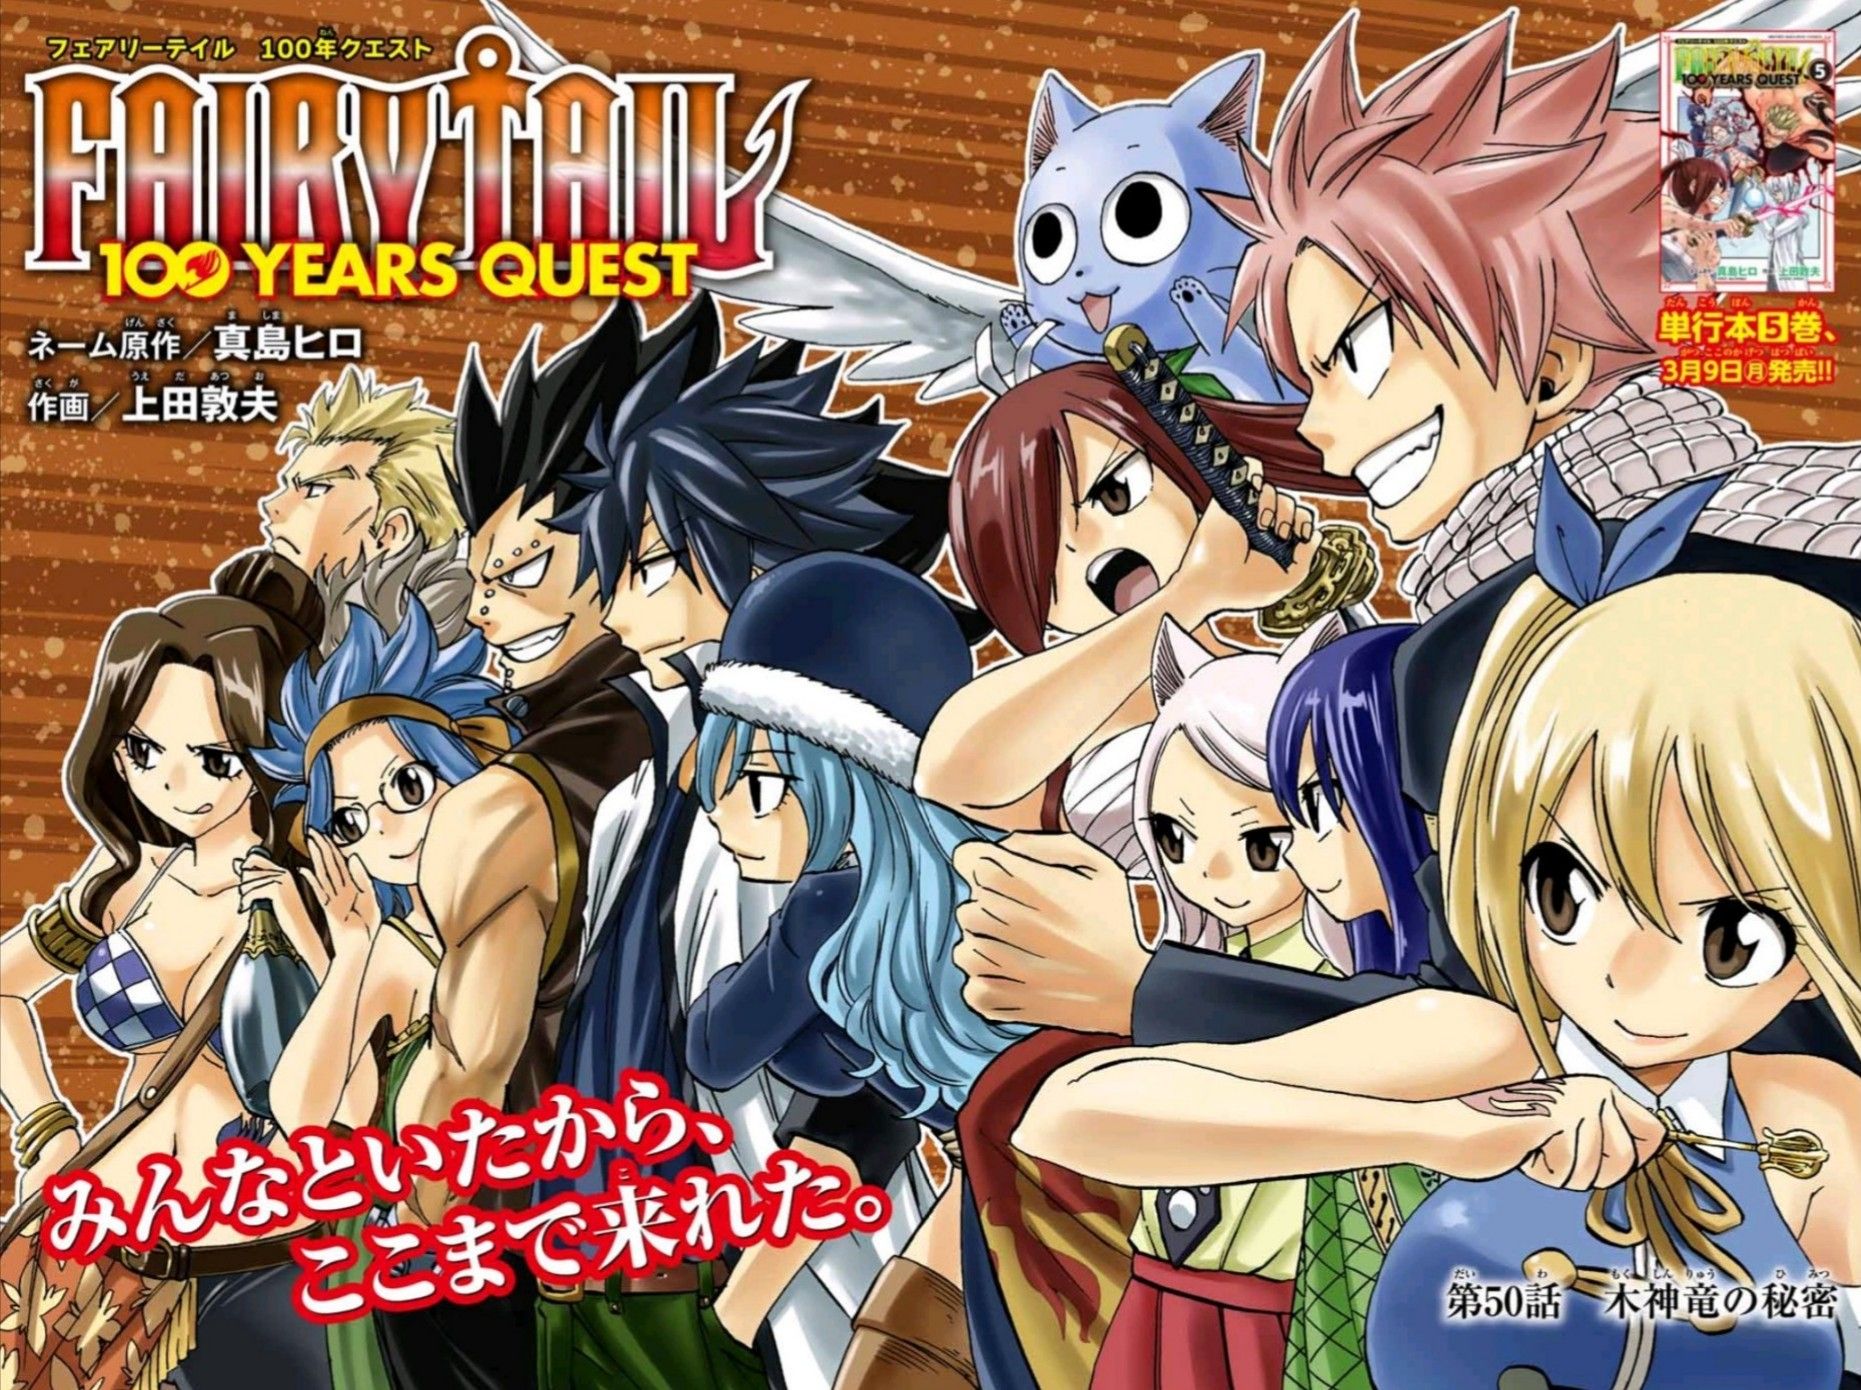 Japan Hiro Mashima Atsuo Ueda Manga Fairy Tail 100 Years Quest Vol 1 Japanese Anime Com Other Anime Collectibles